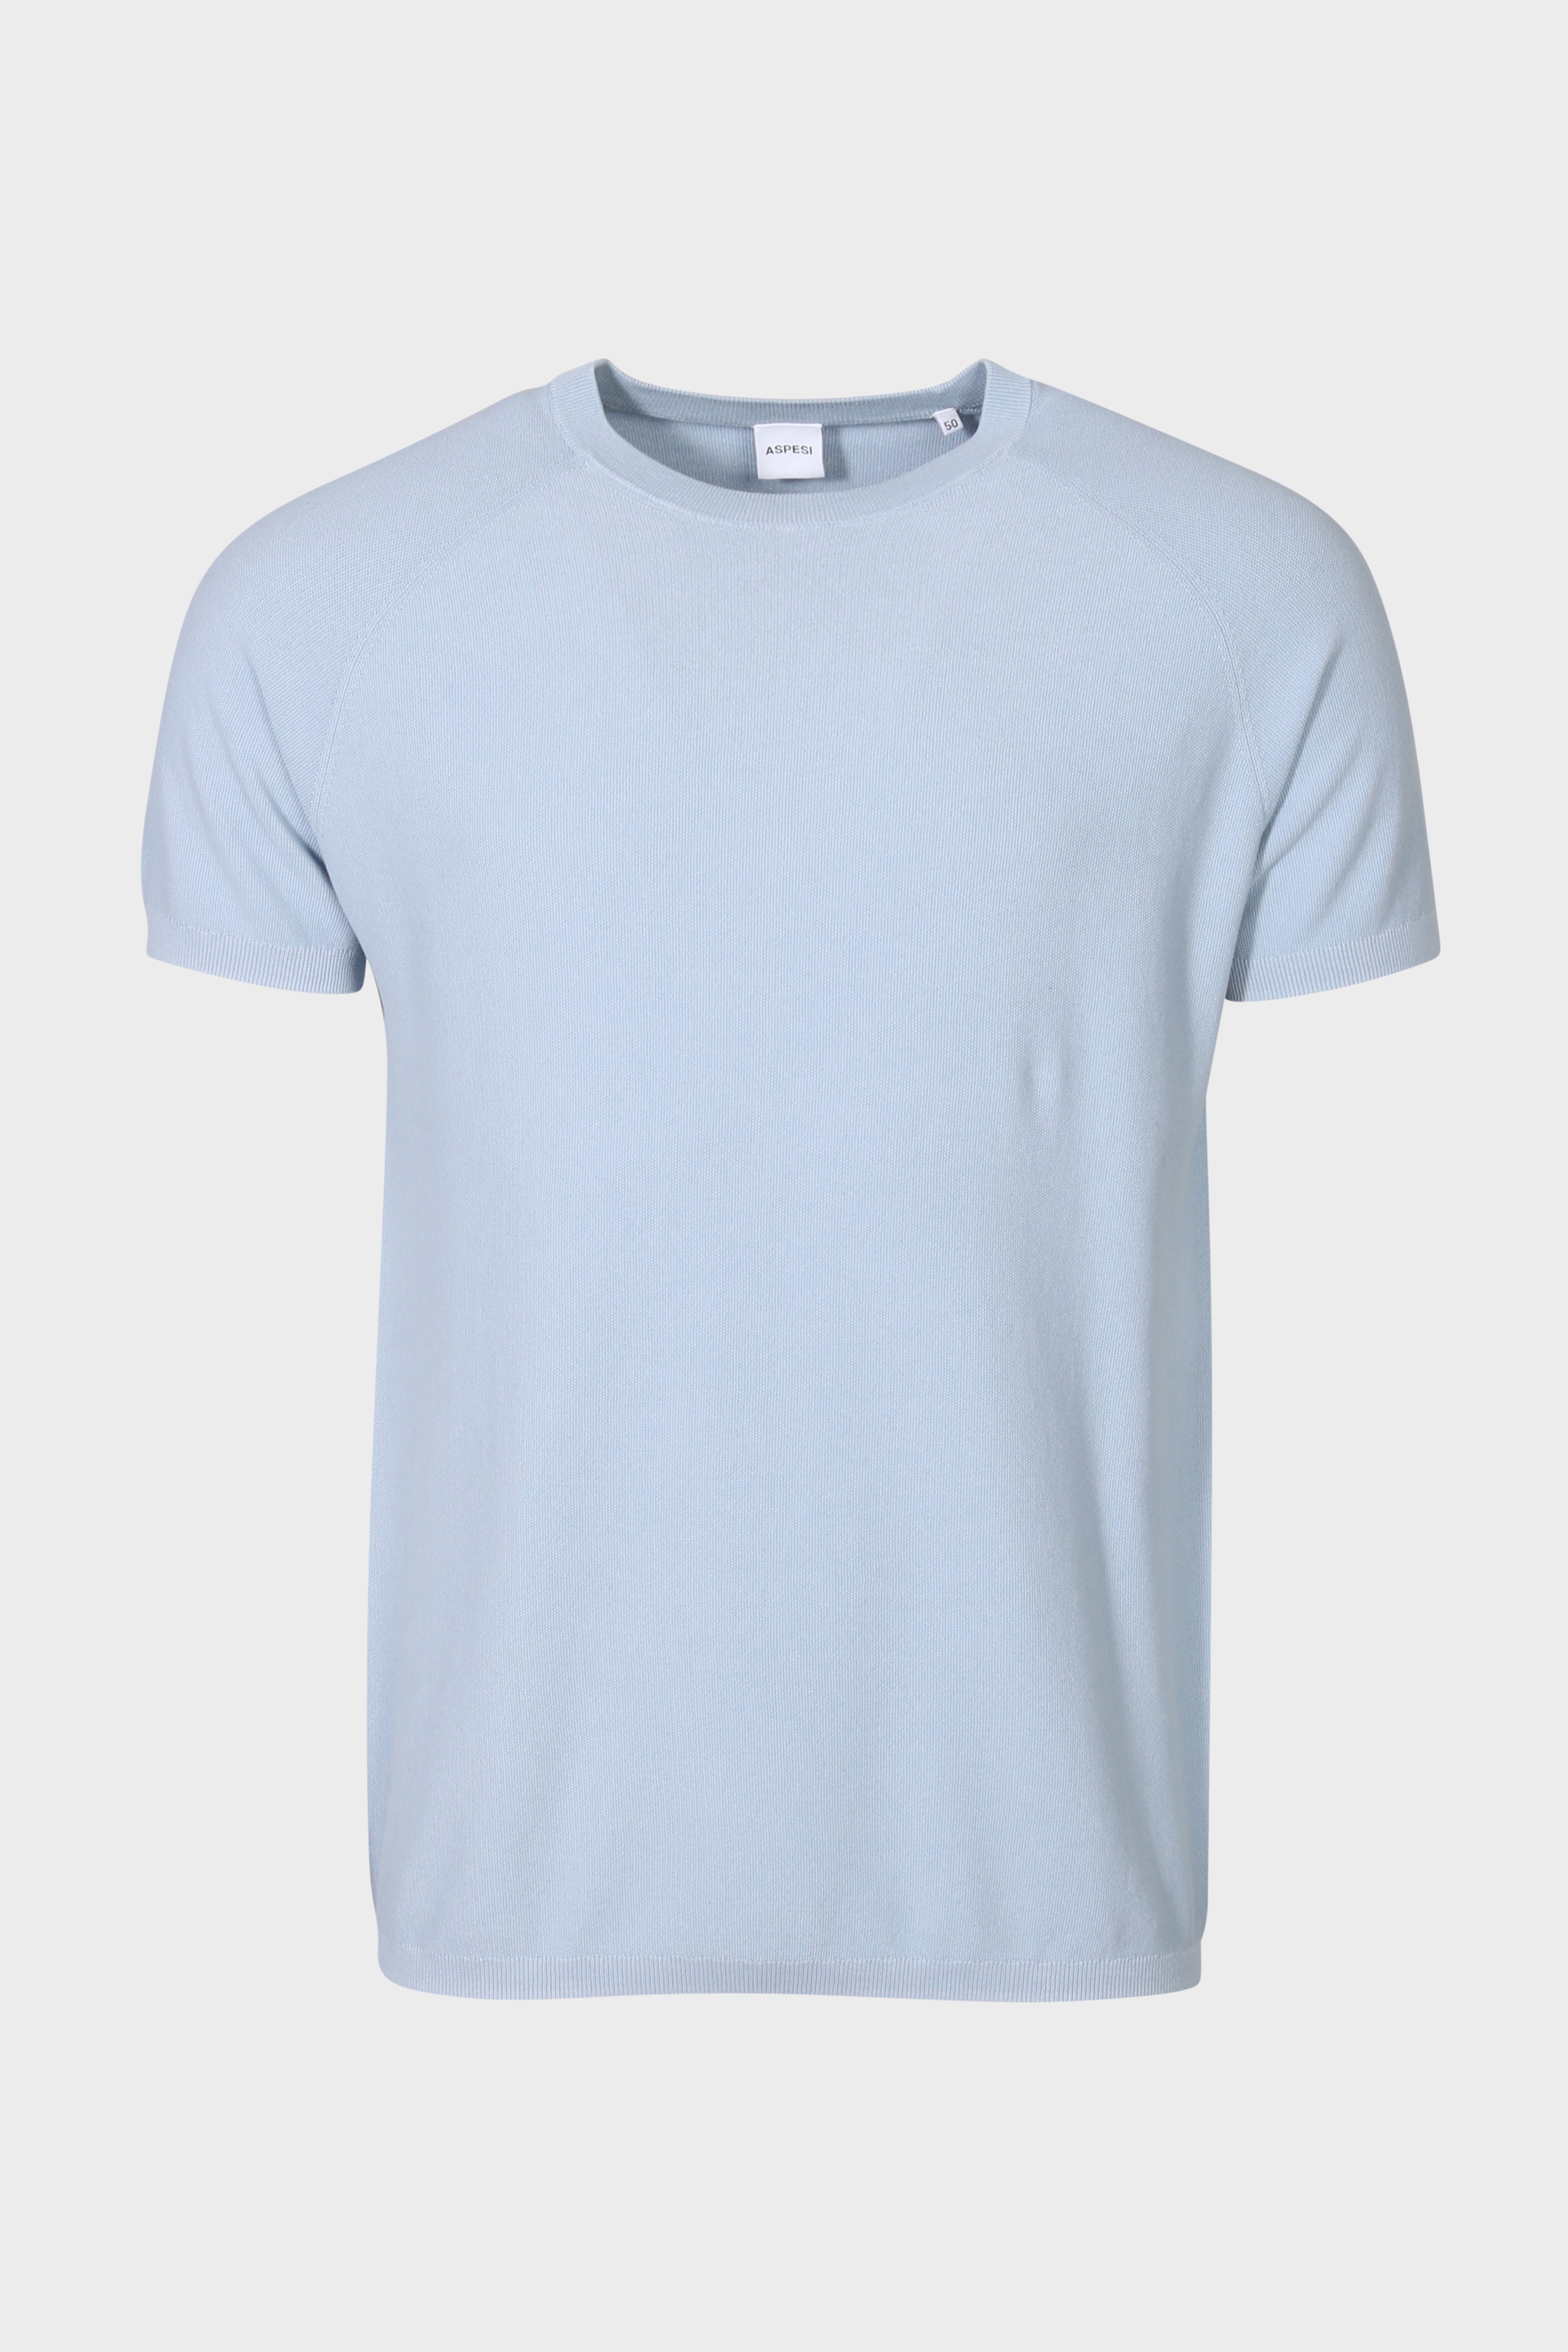 ASPESI Knit T-Shirt in Light Blue 52